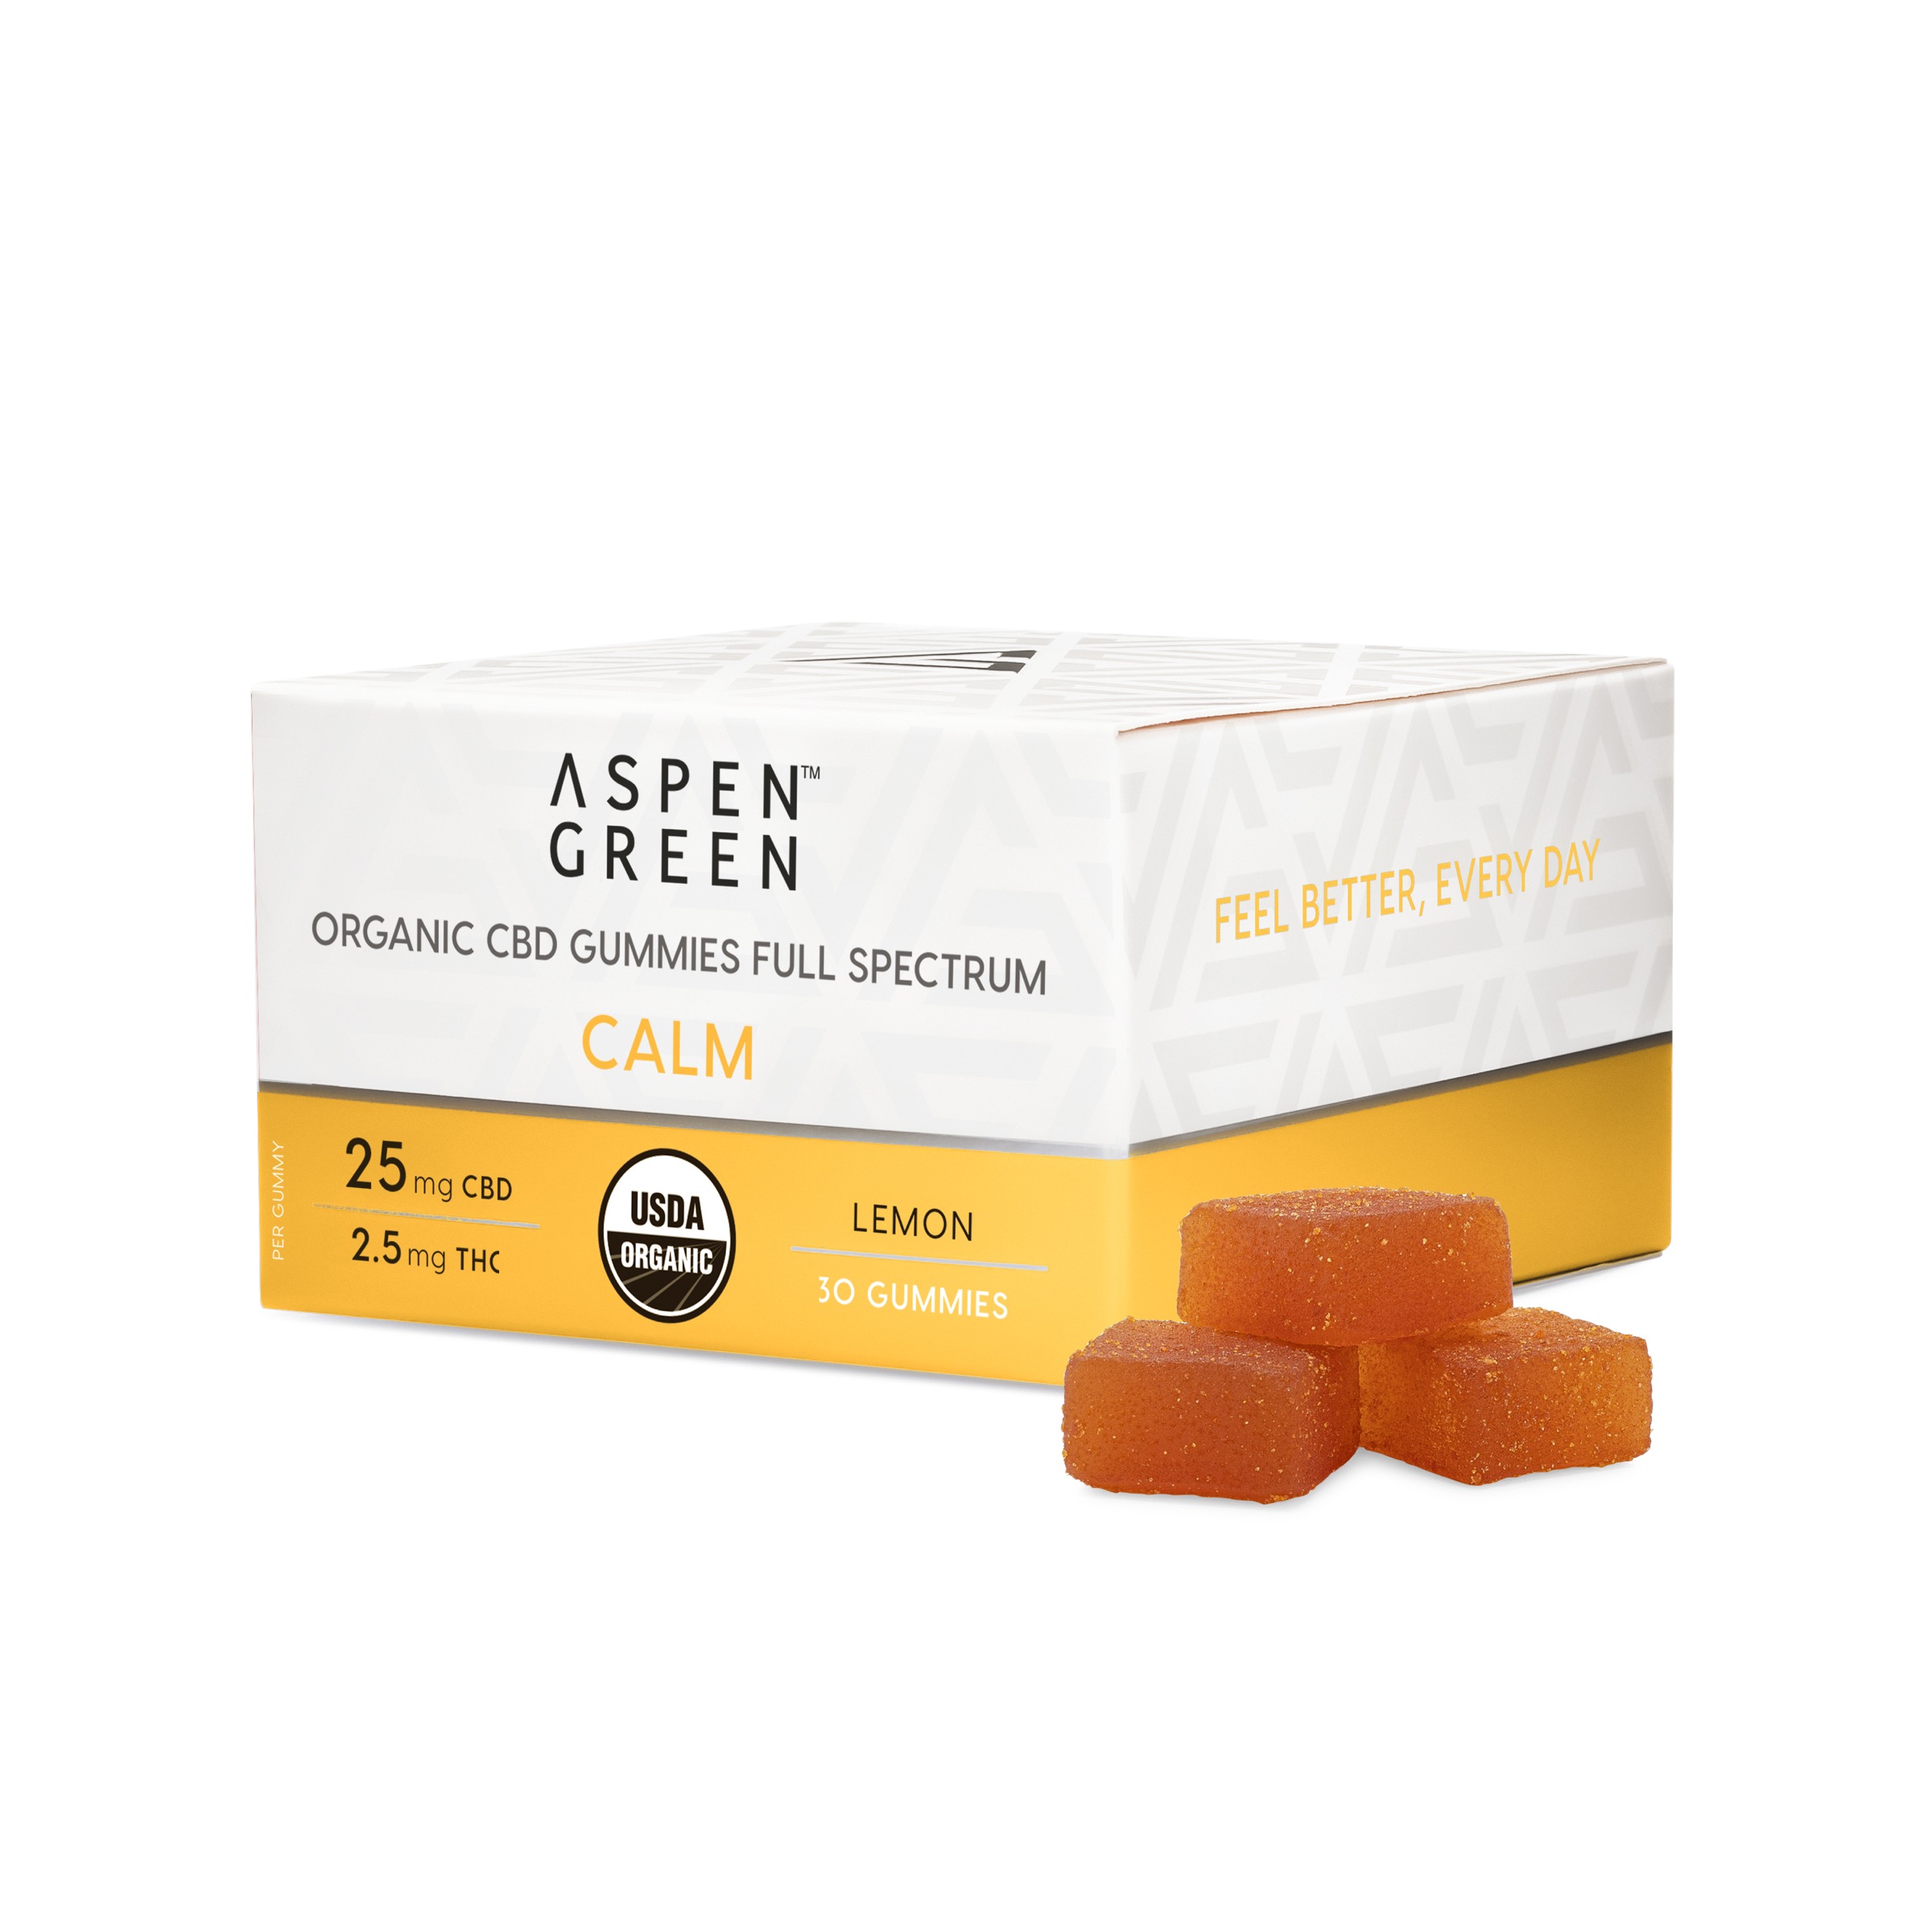 Aspen Green USDA Certified Organic CBD Gummies box with gummies, Calm (25mg CBD), Lemon Flavor